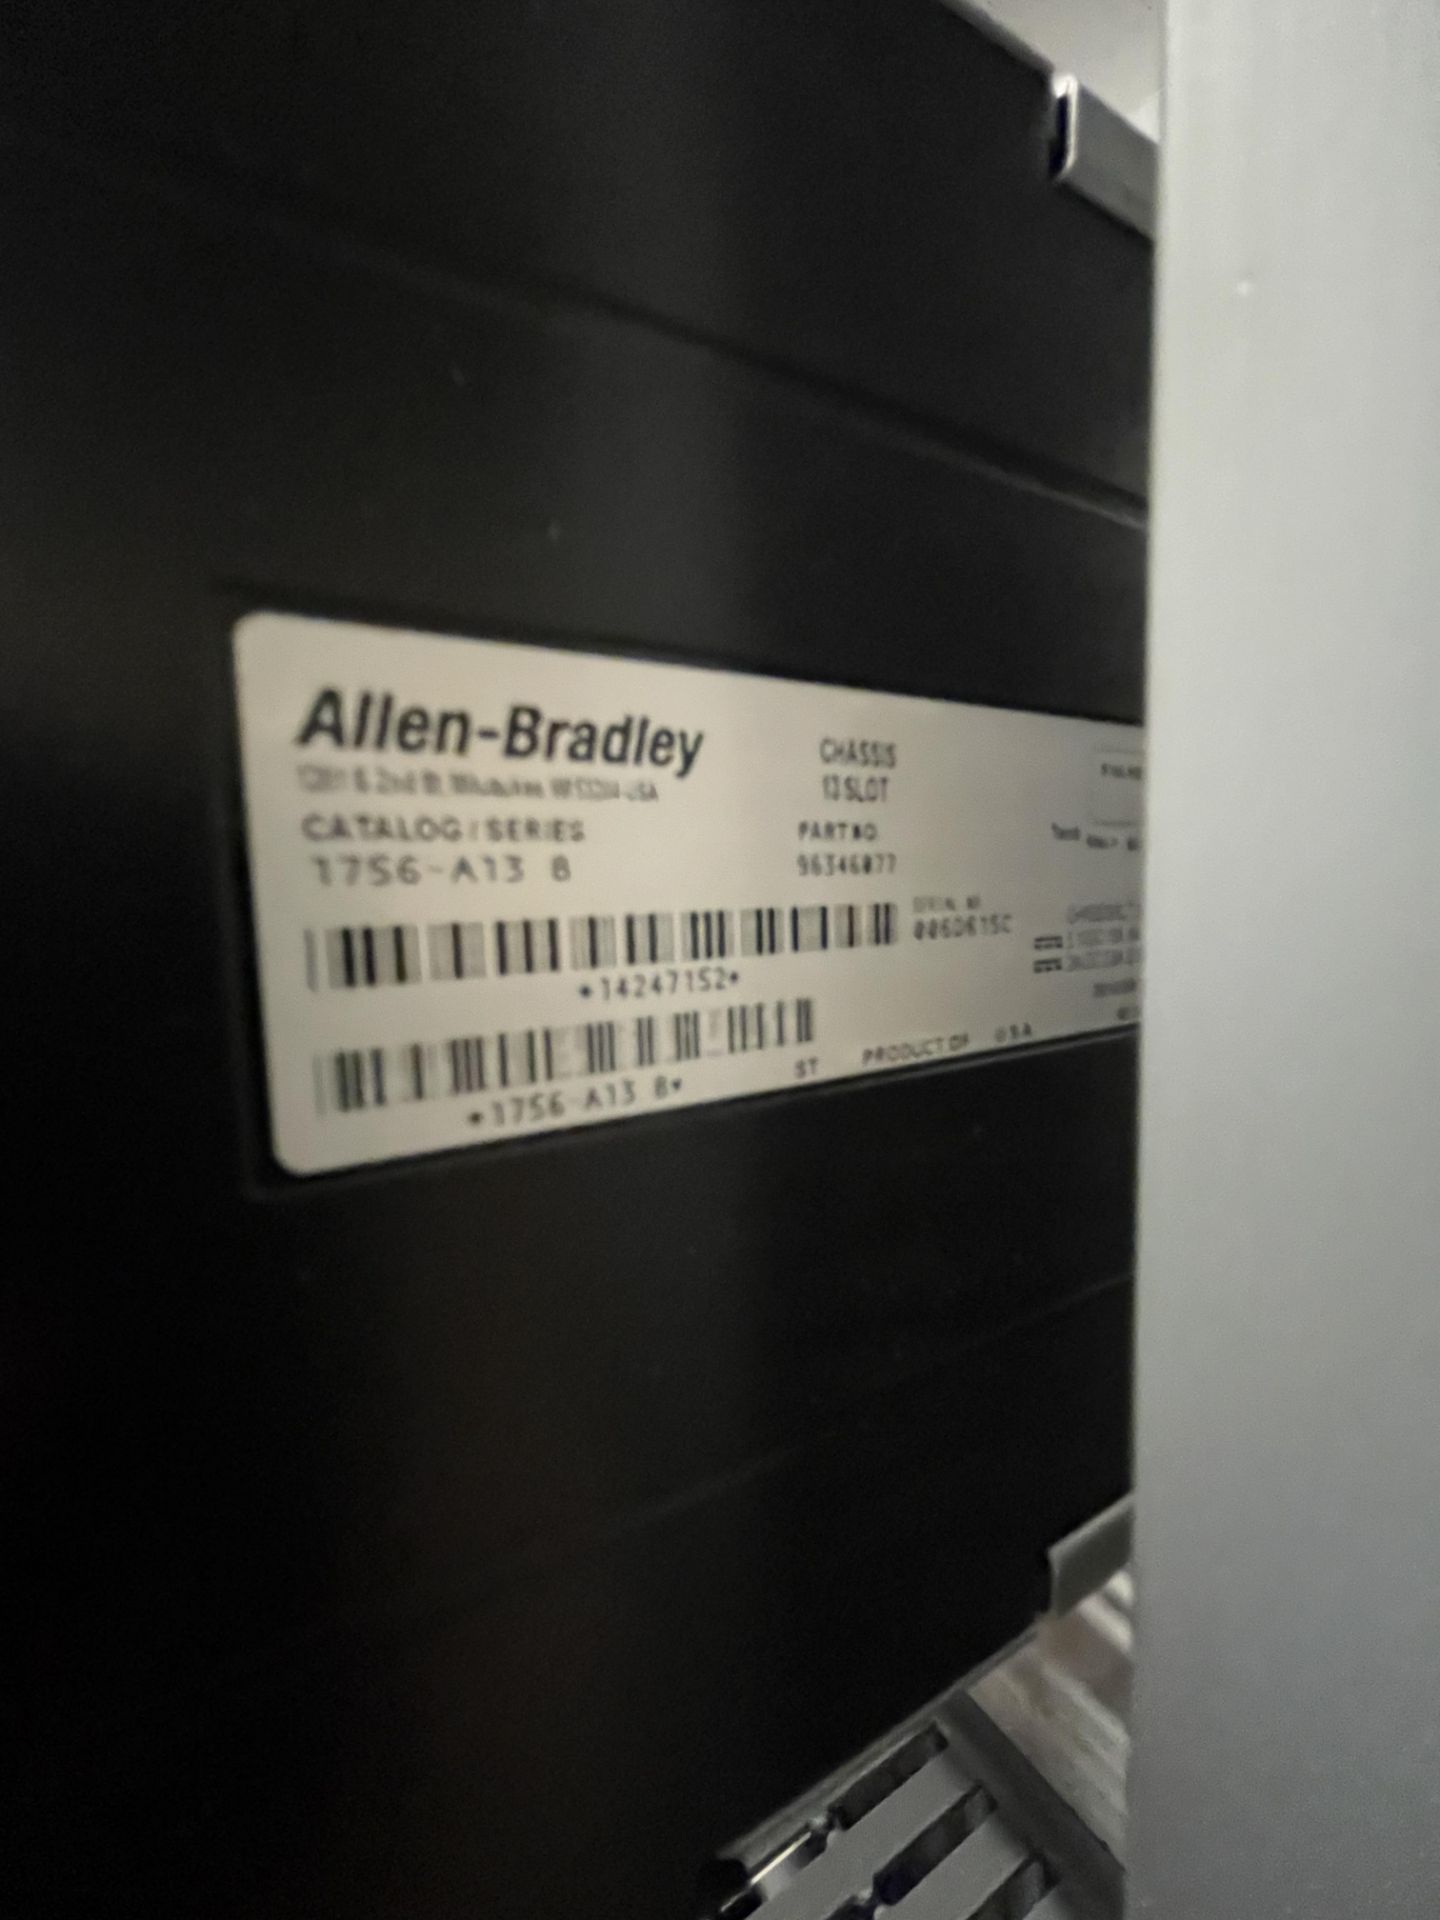 (2) ALLEN-BRADLEY PLC RACKS 13 SLOT CATALOG SERIES 1756-A13 B - Image 6 of 6